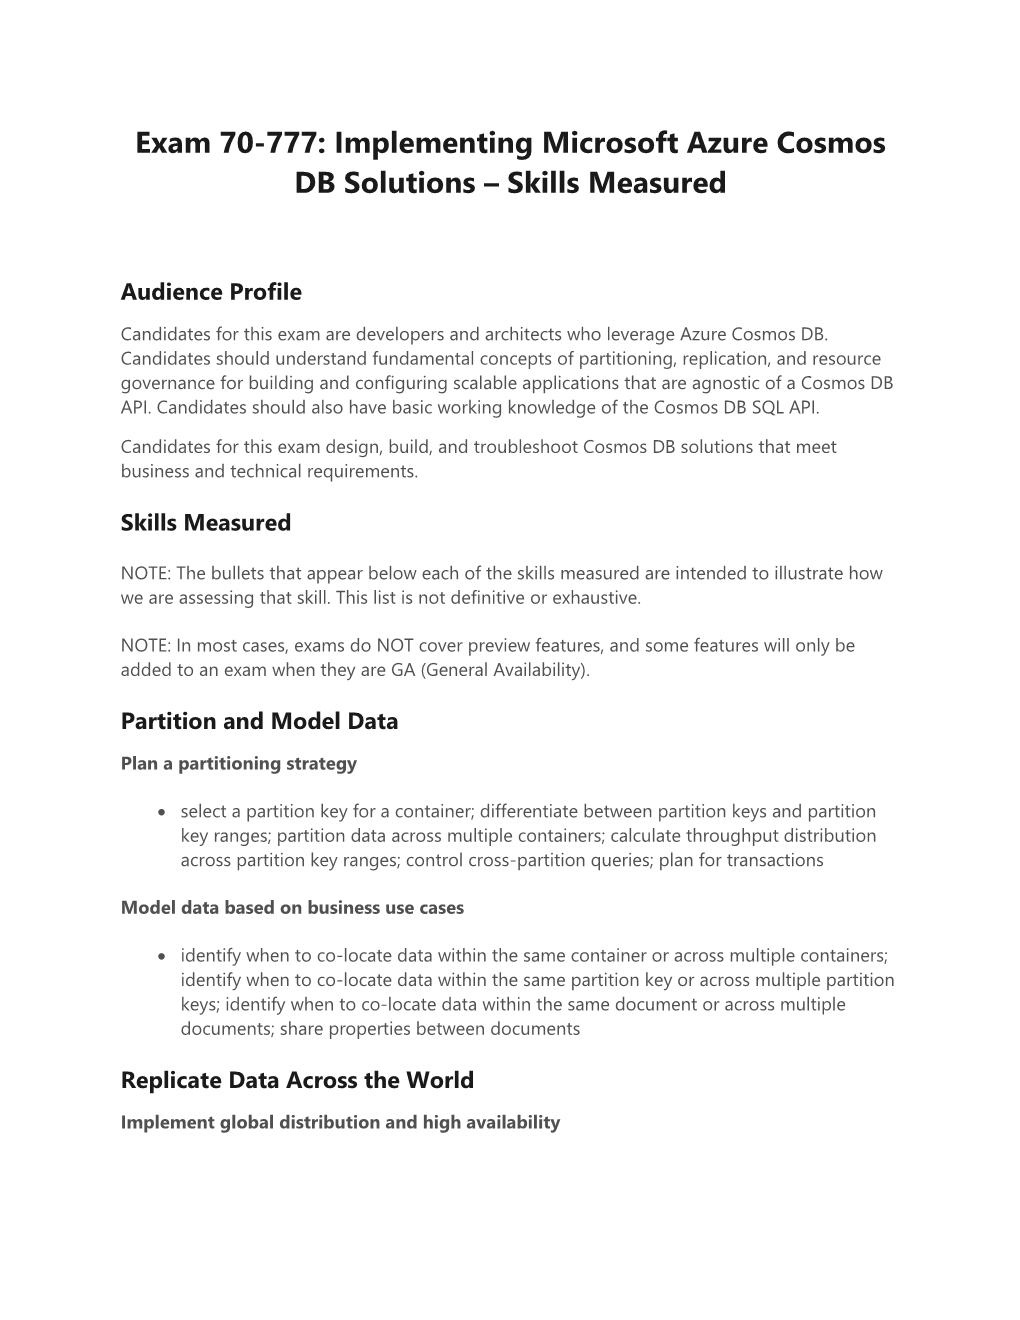 Exam 70-777: Implementing Microsoft Azure Cosmos DB Solutions – Skills Measured